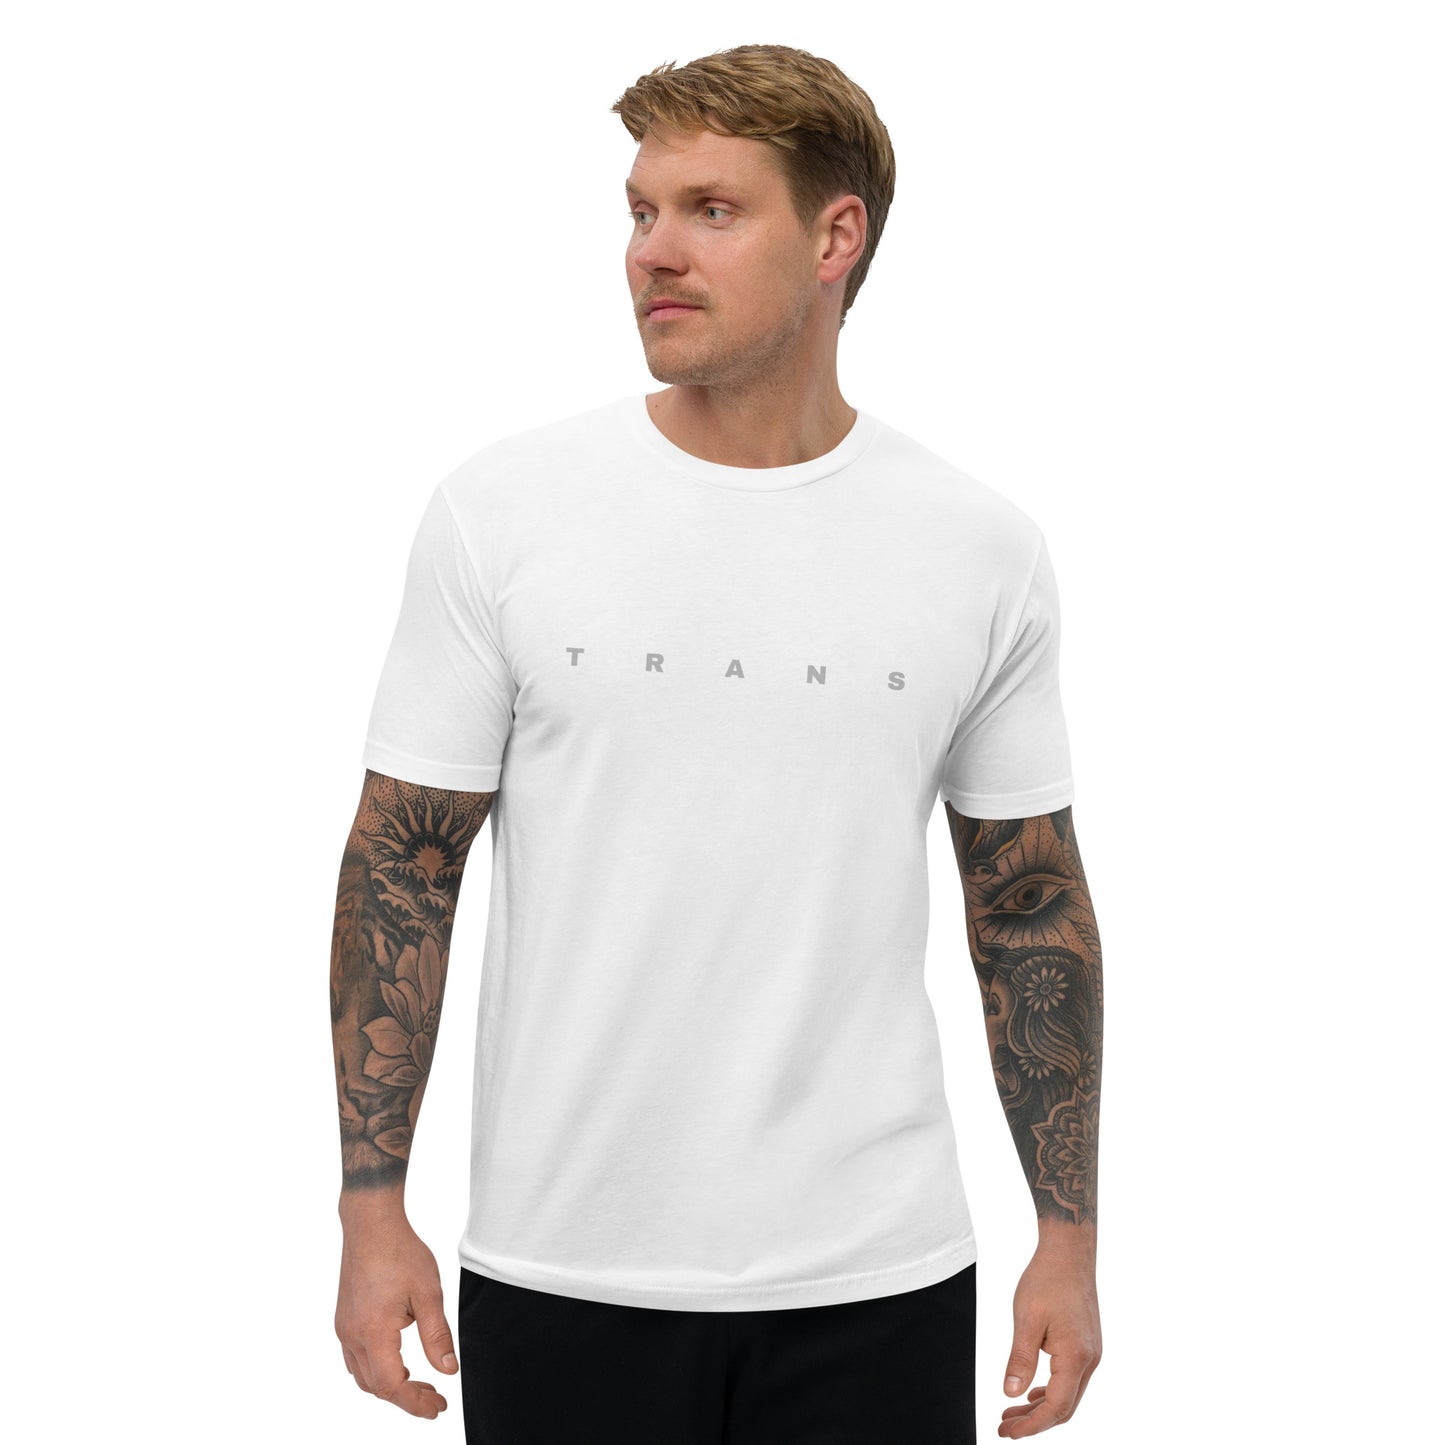 TRANS Short Sleeve T-shirt